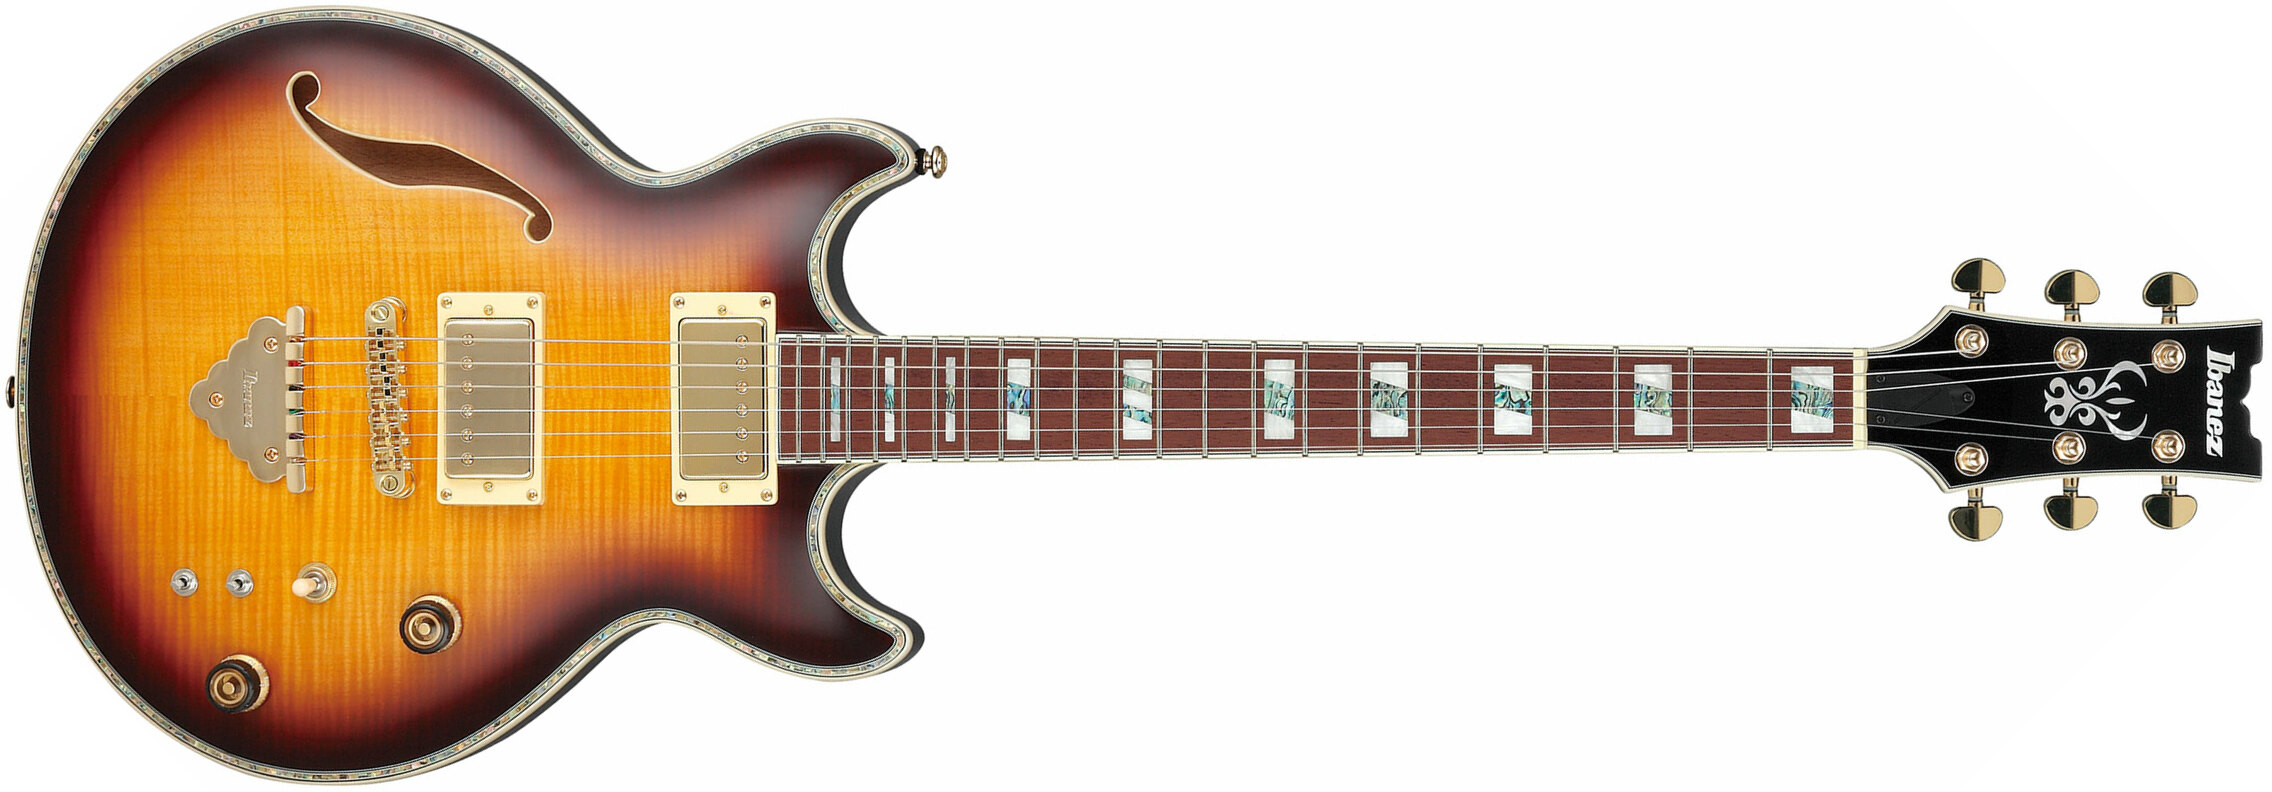 Ibanez Ar520hfm Vls Standard Hh Ht Jat - Violin Sunburst - Hollow bodytock elektrische gitaar - Main picture